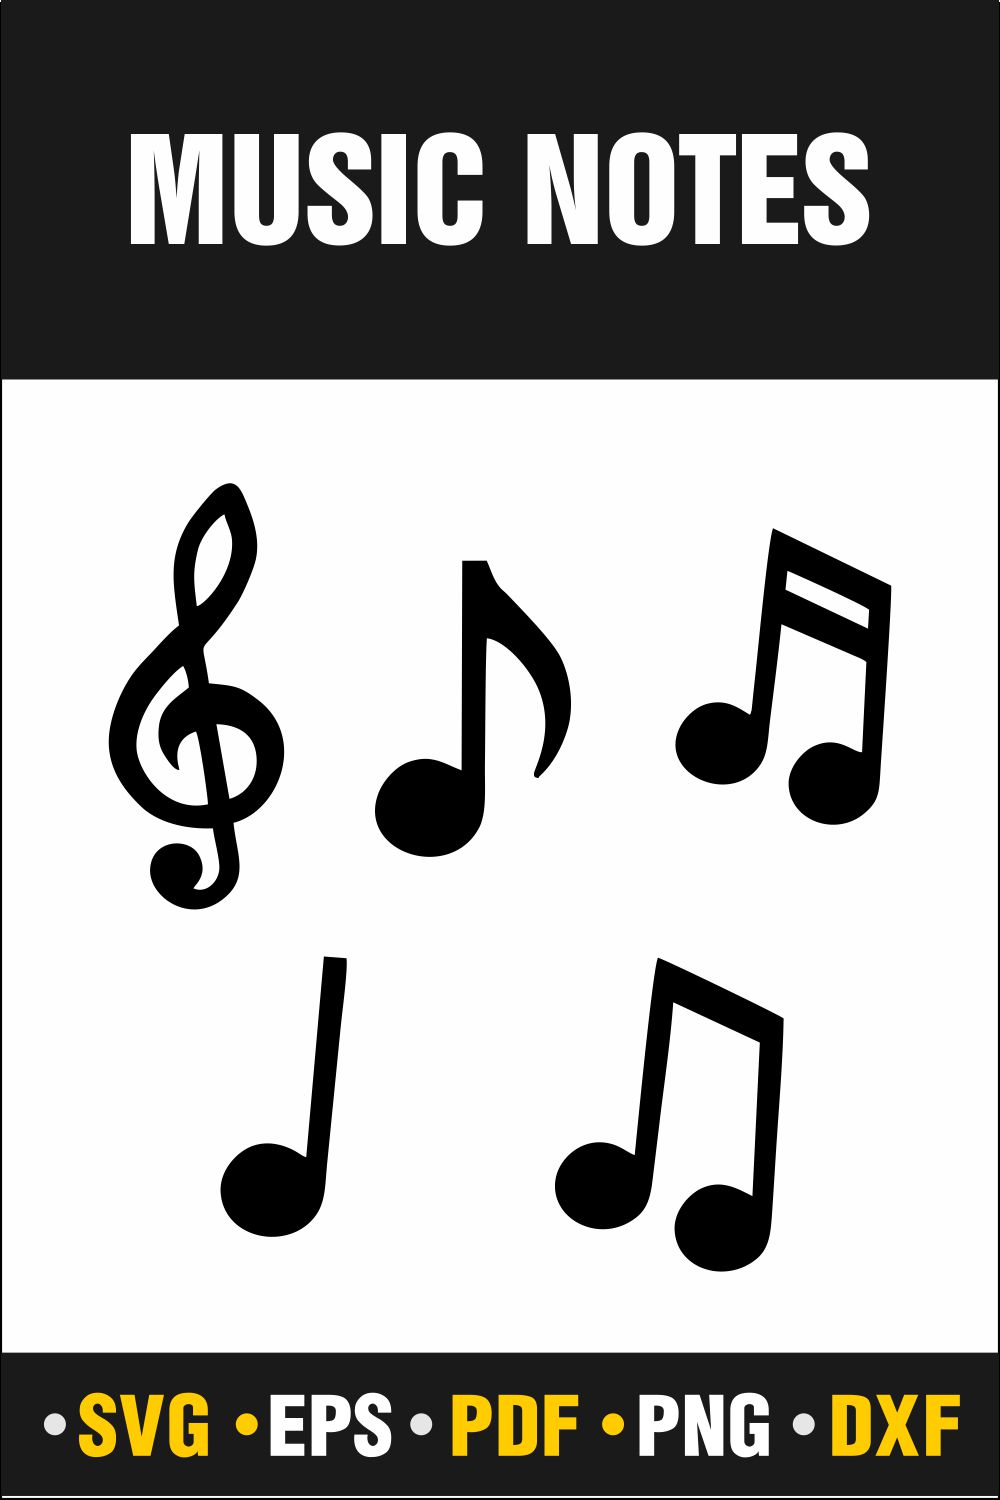 Music Svg, Music, Music Notes Svg, Music Notes Png, Music Png, Music Note Svg, Instant Download Vector Cut file Cricut, Silhouette, Pdf Png, Dxf, Decal pinterest preview image.